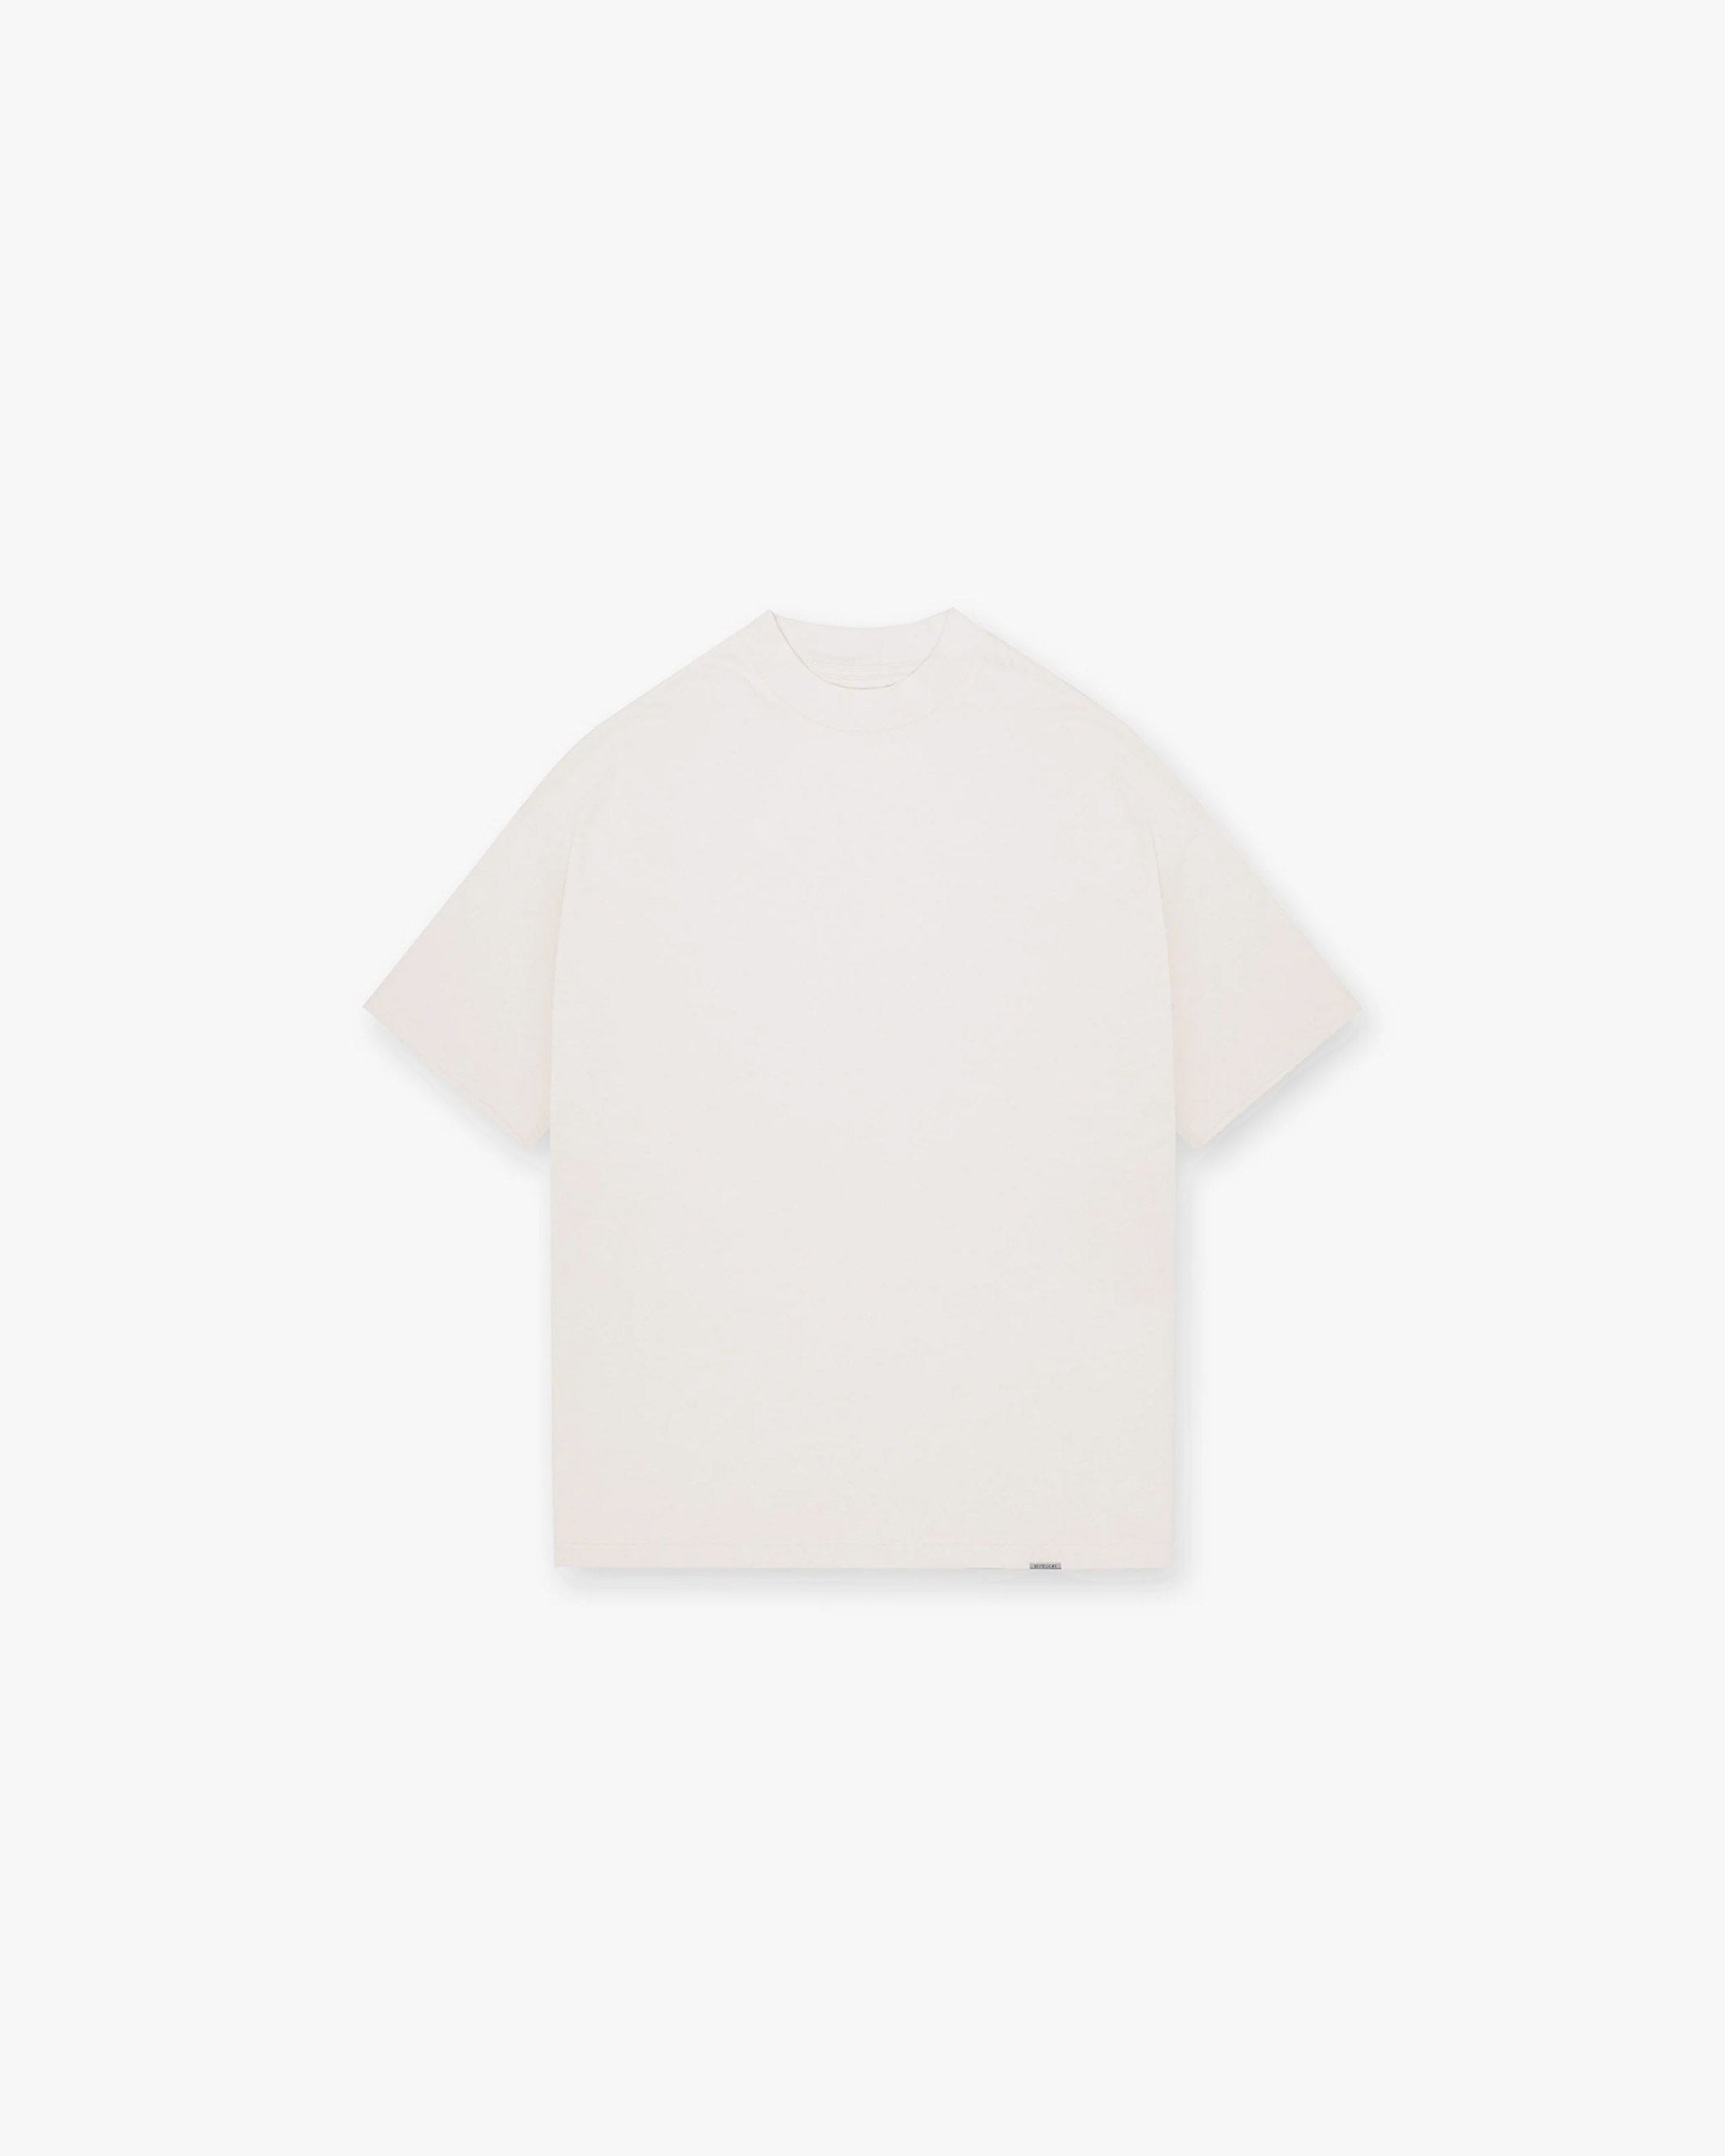 Blank T-Shirt | Vintage White T-Shirts BLANKS | Represent Clo